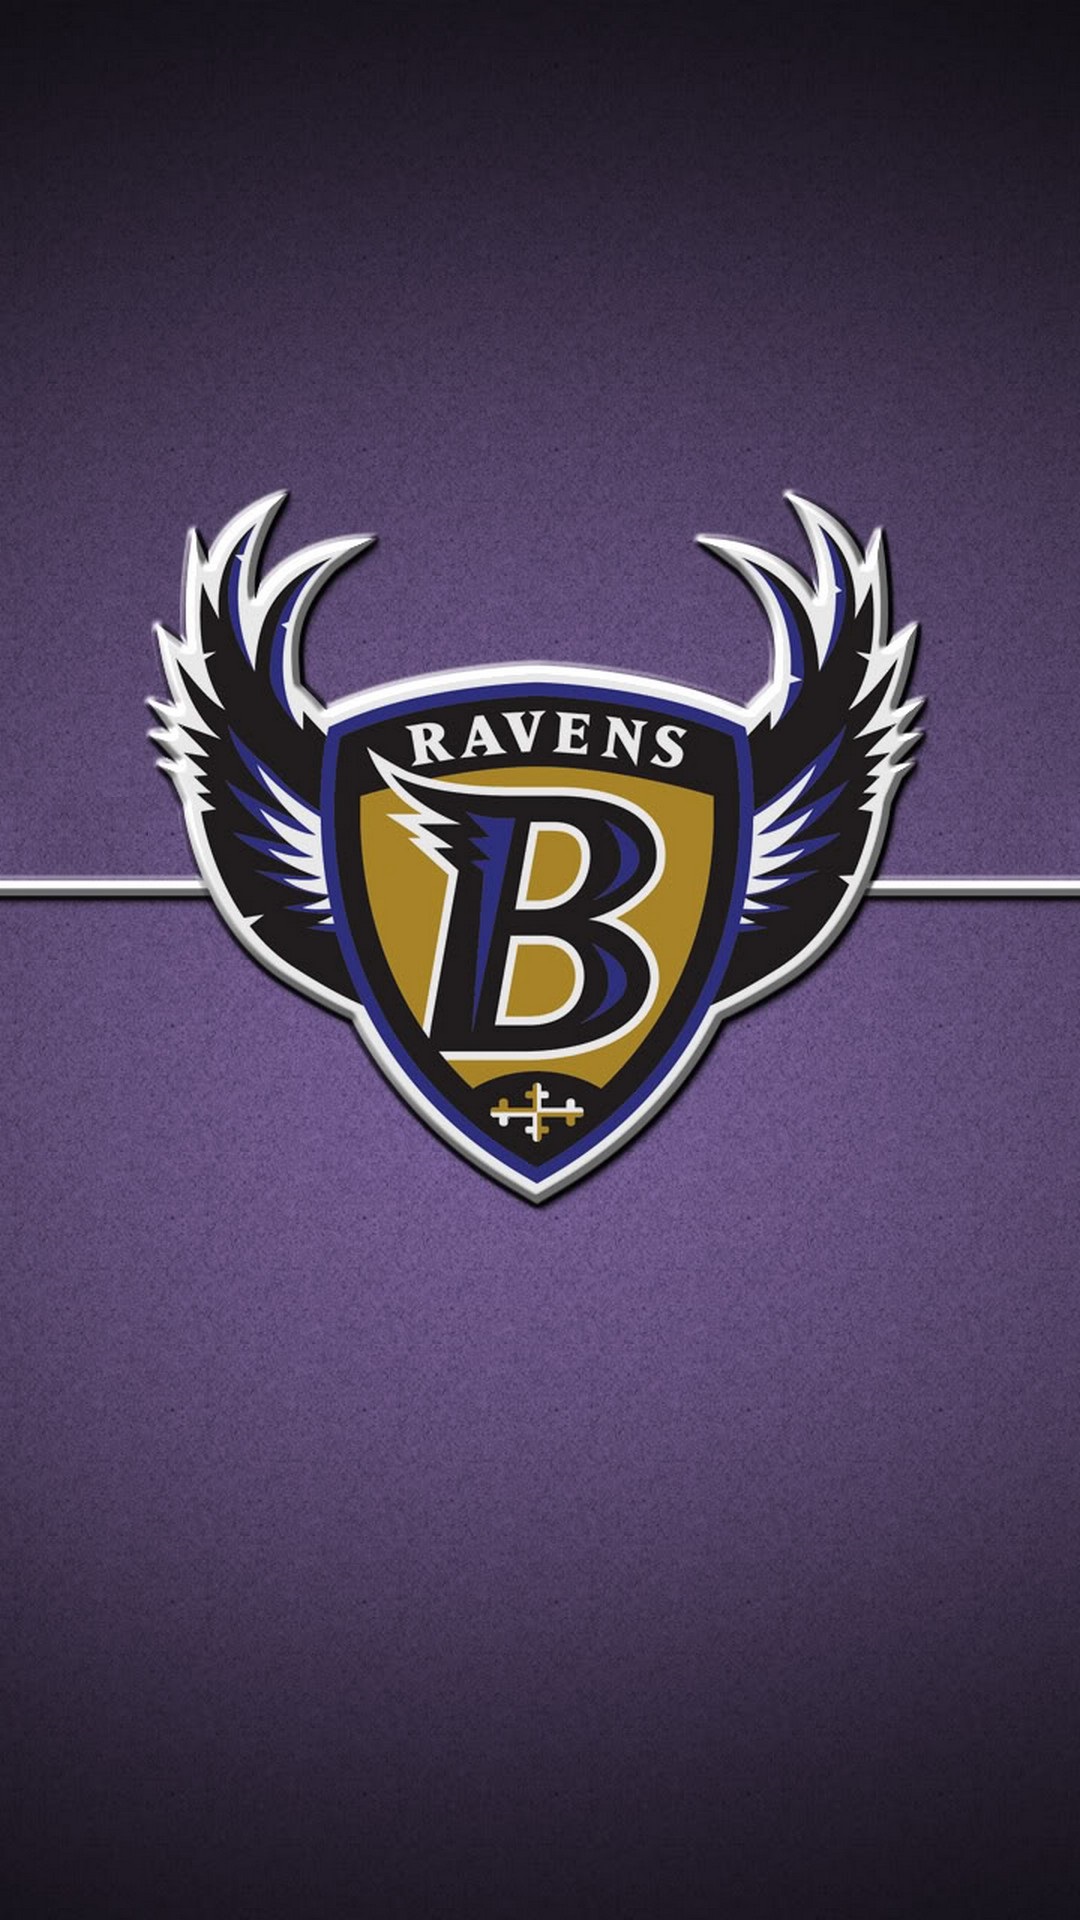 Baltimore Ravens iPhone Lock Screen Wallpaper - 2021 NFL iPhone Wallpaper